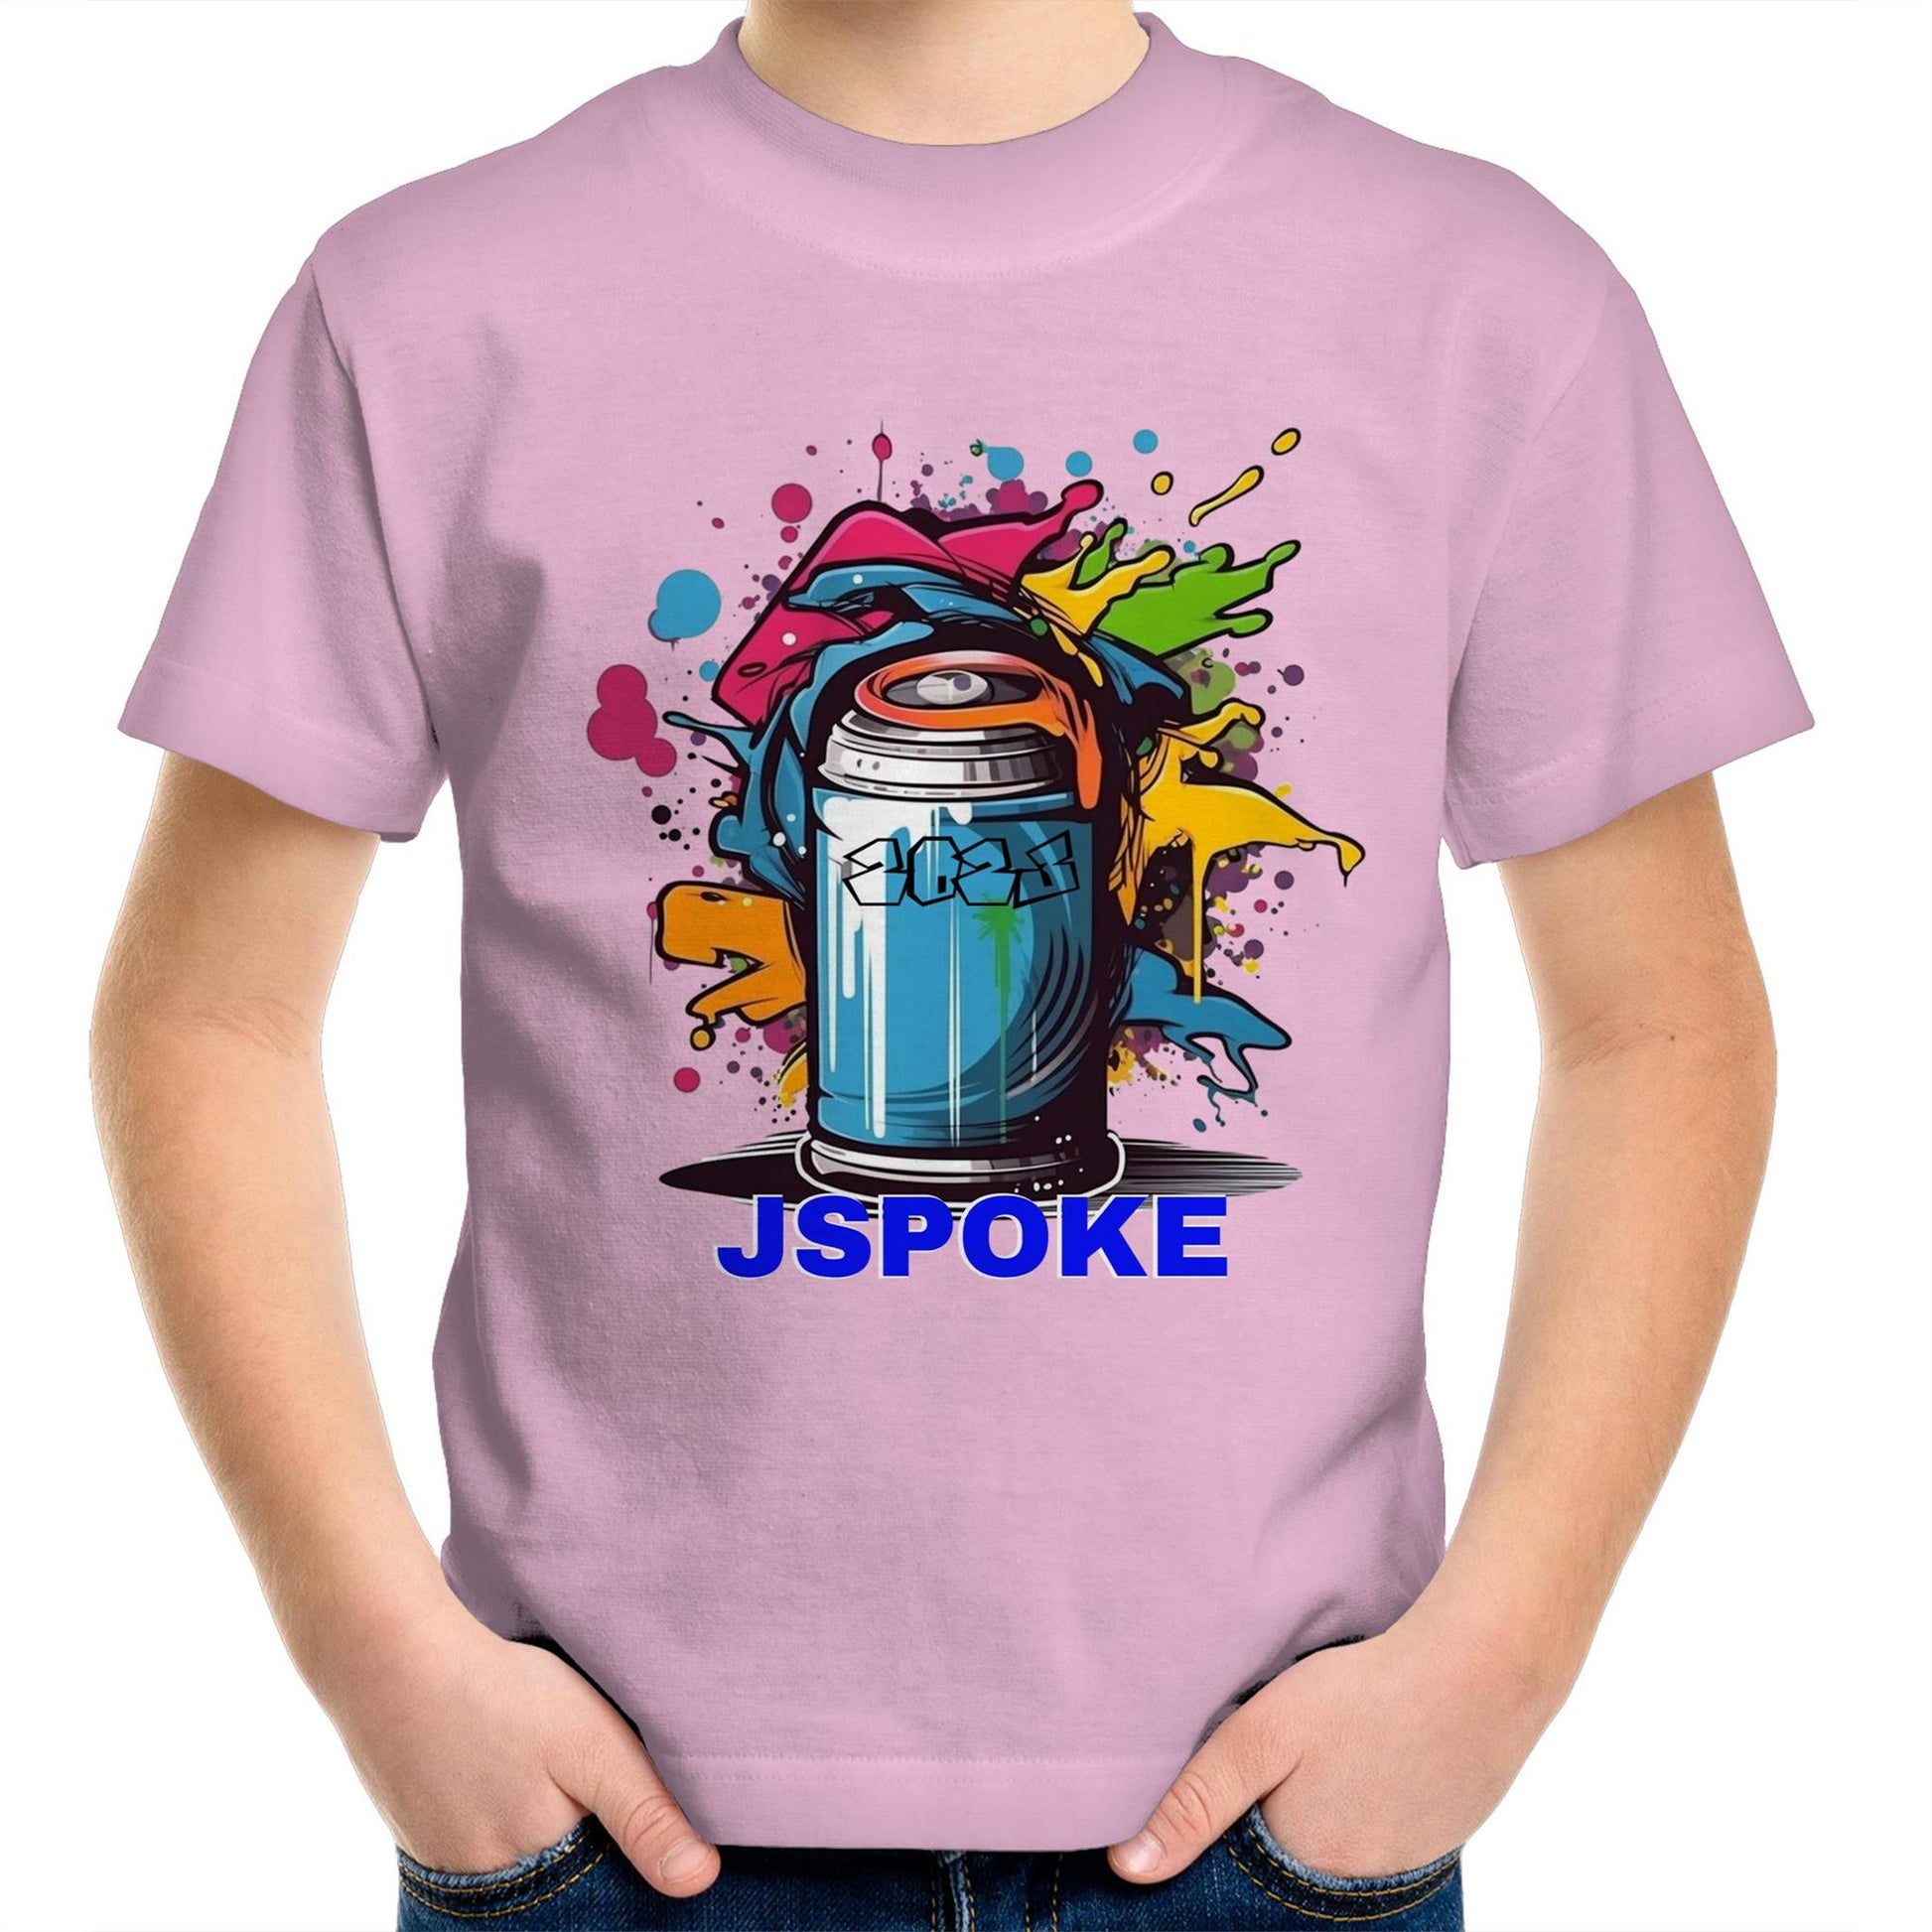 SPRAYTASTIC - Kids Youth T-Shirt - JSPOKE